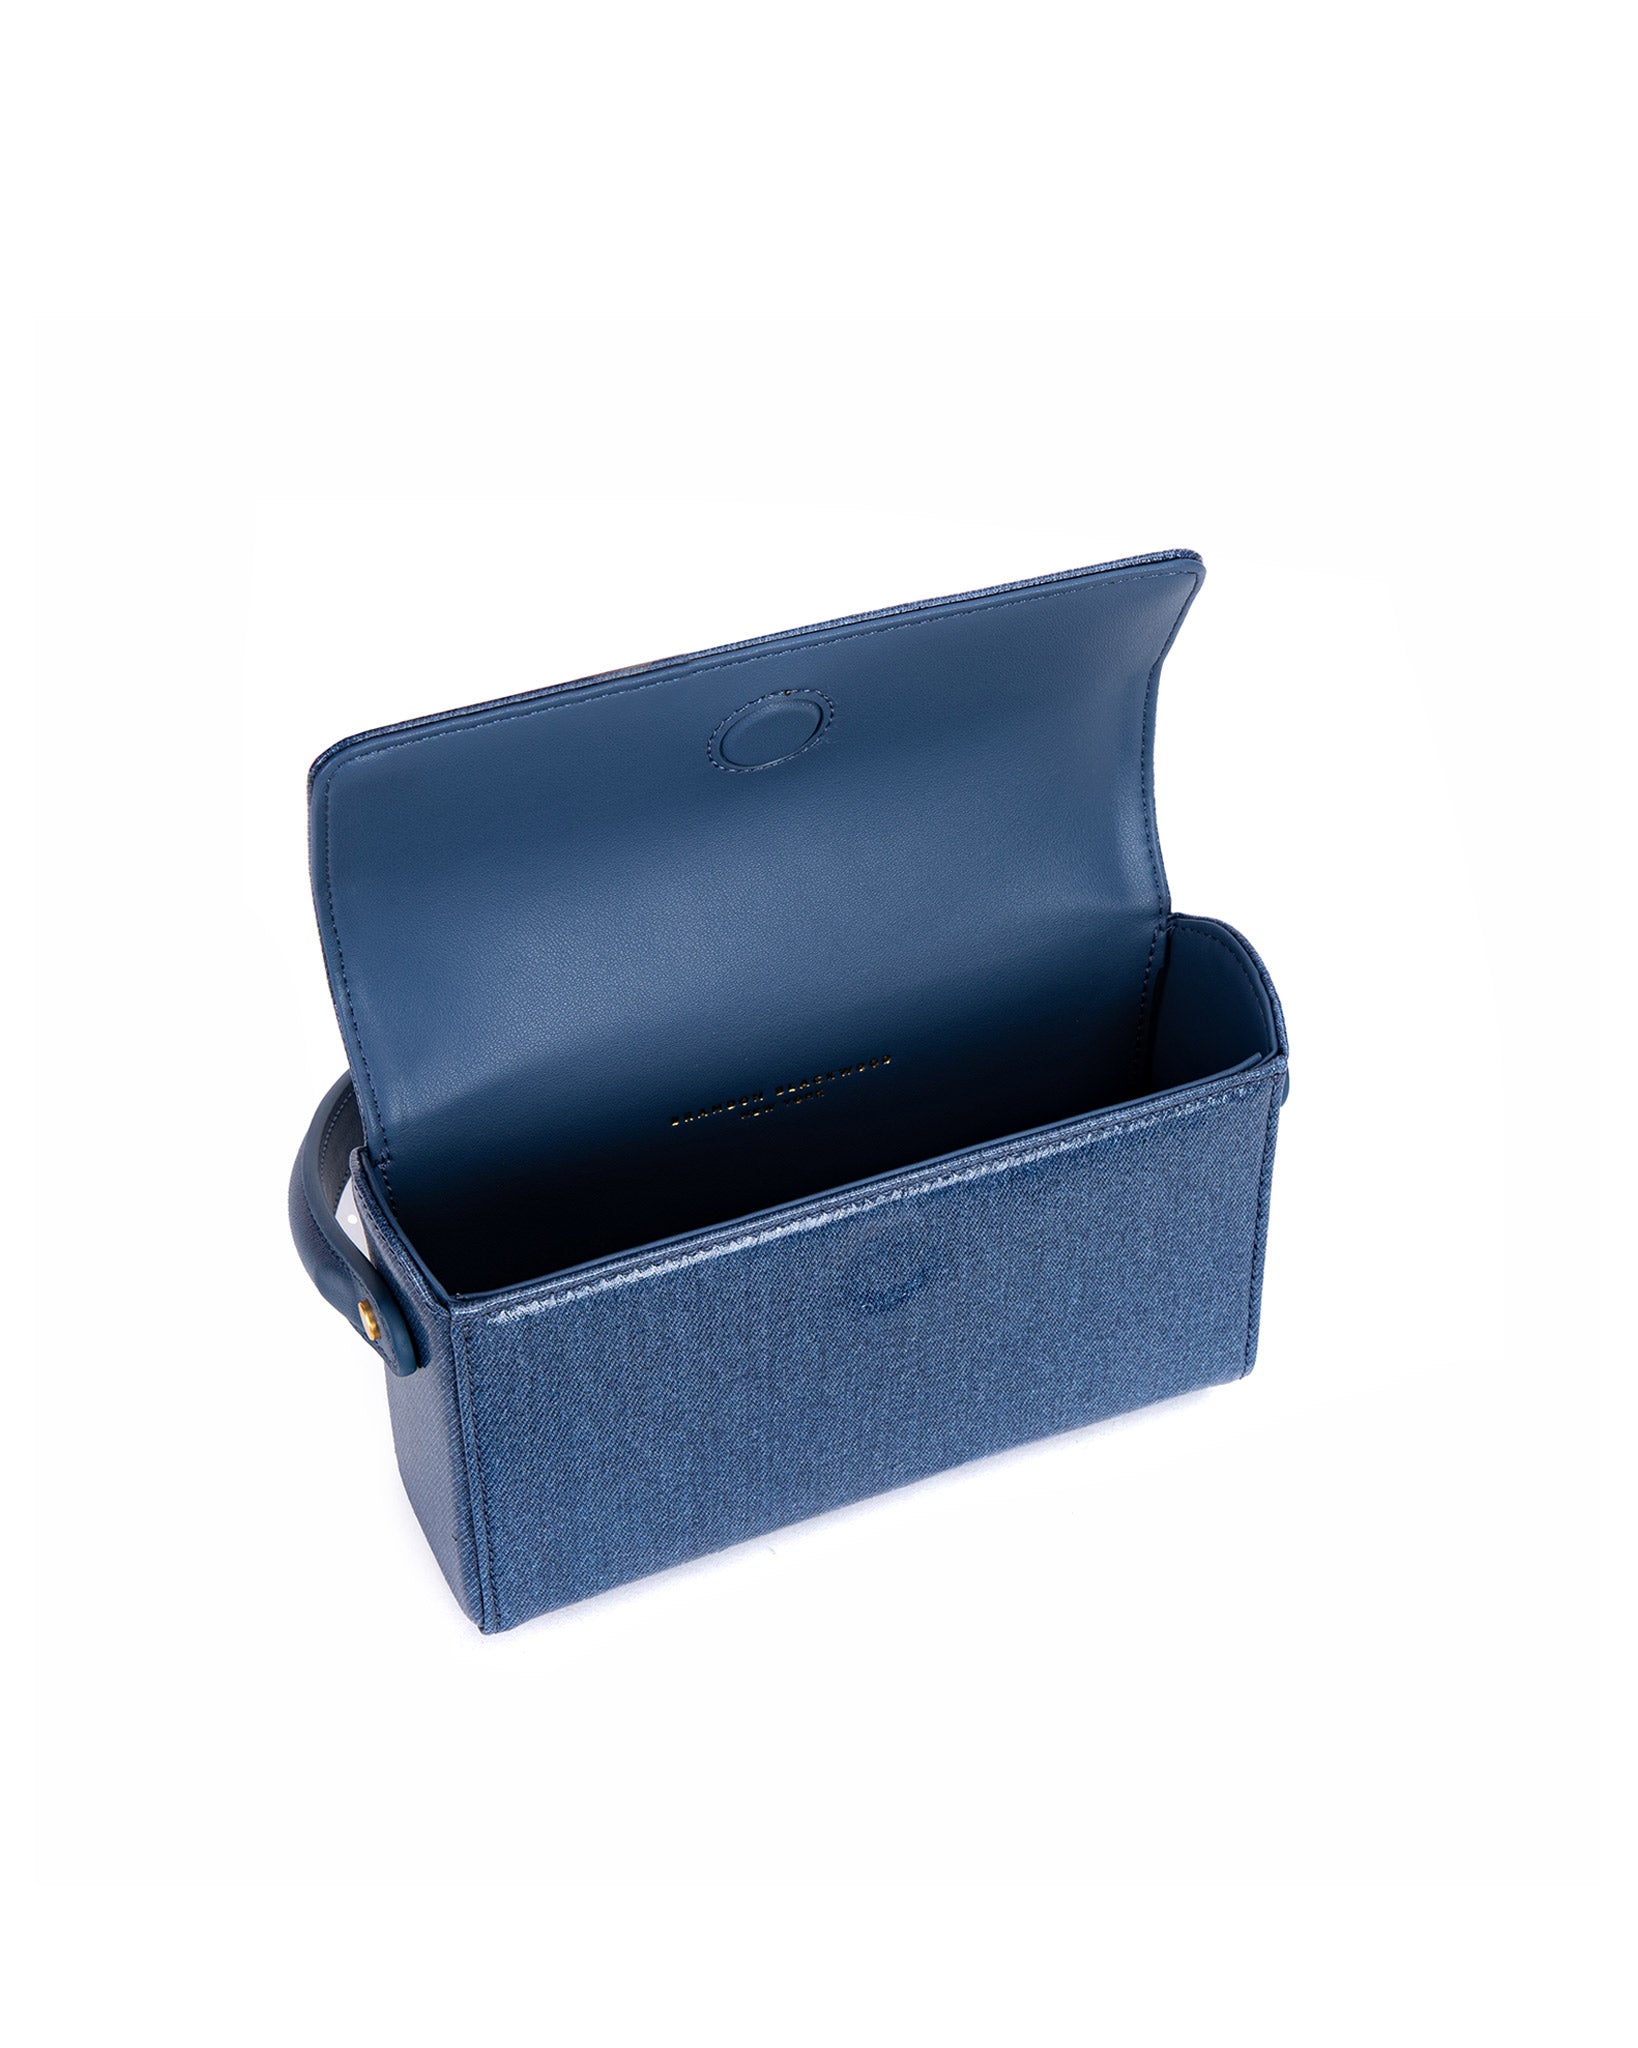 Celine medium box bag in blue green teal pebbles leather